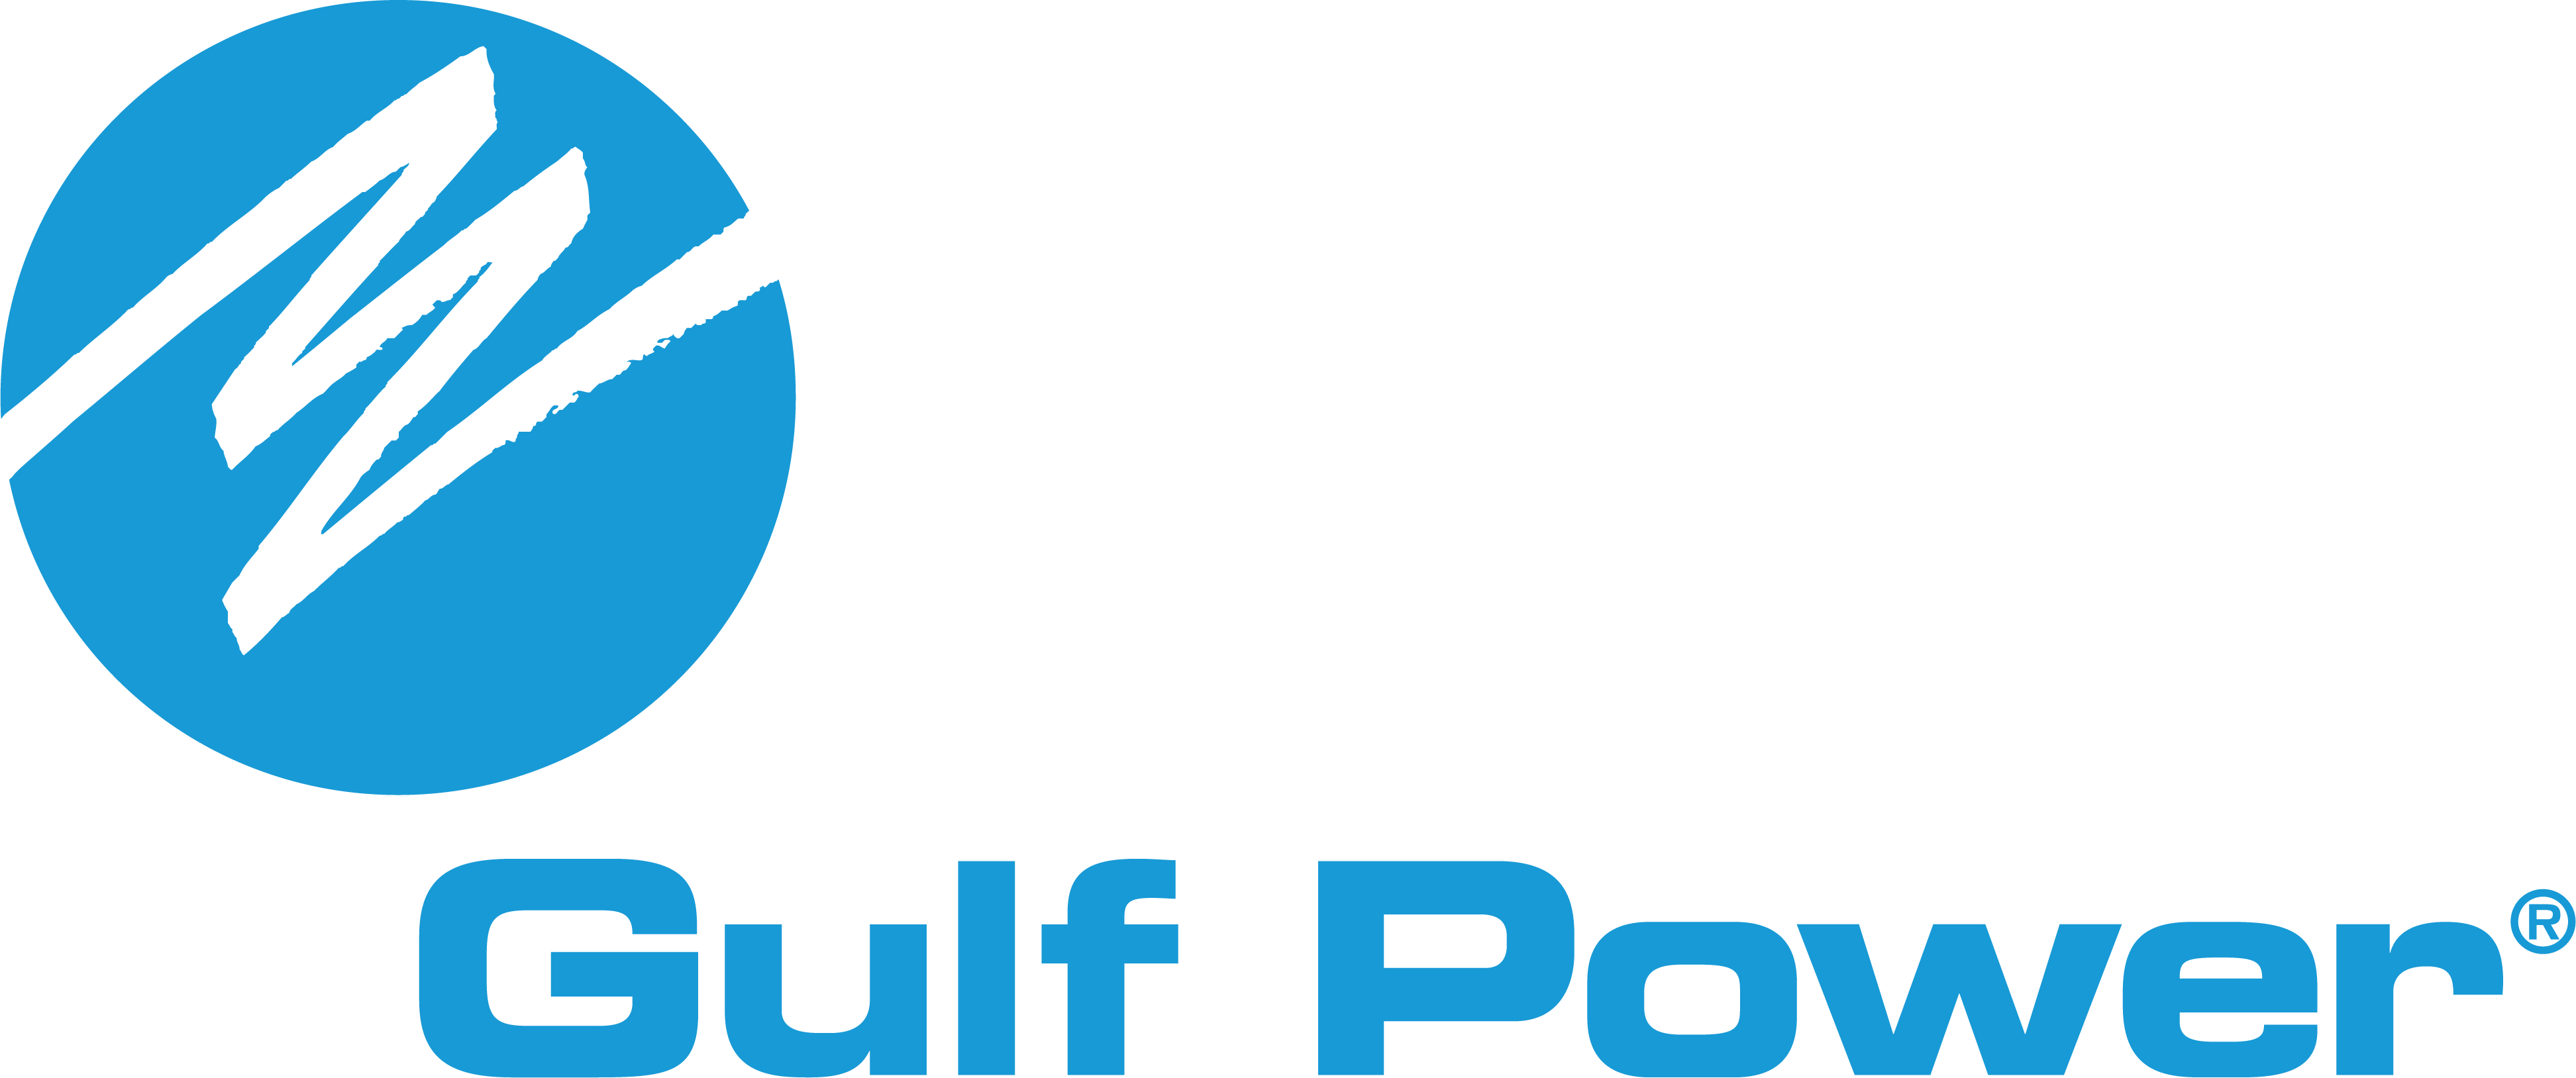 Gulf Power